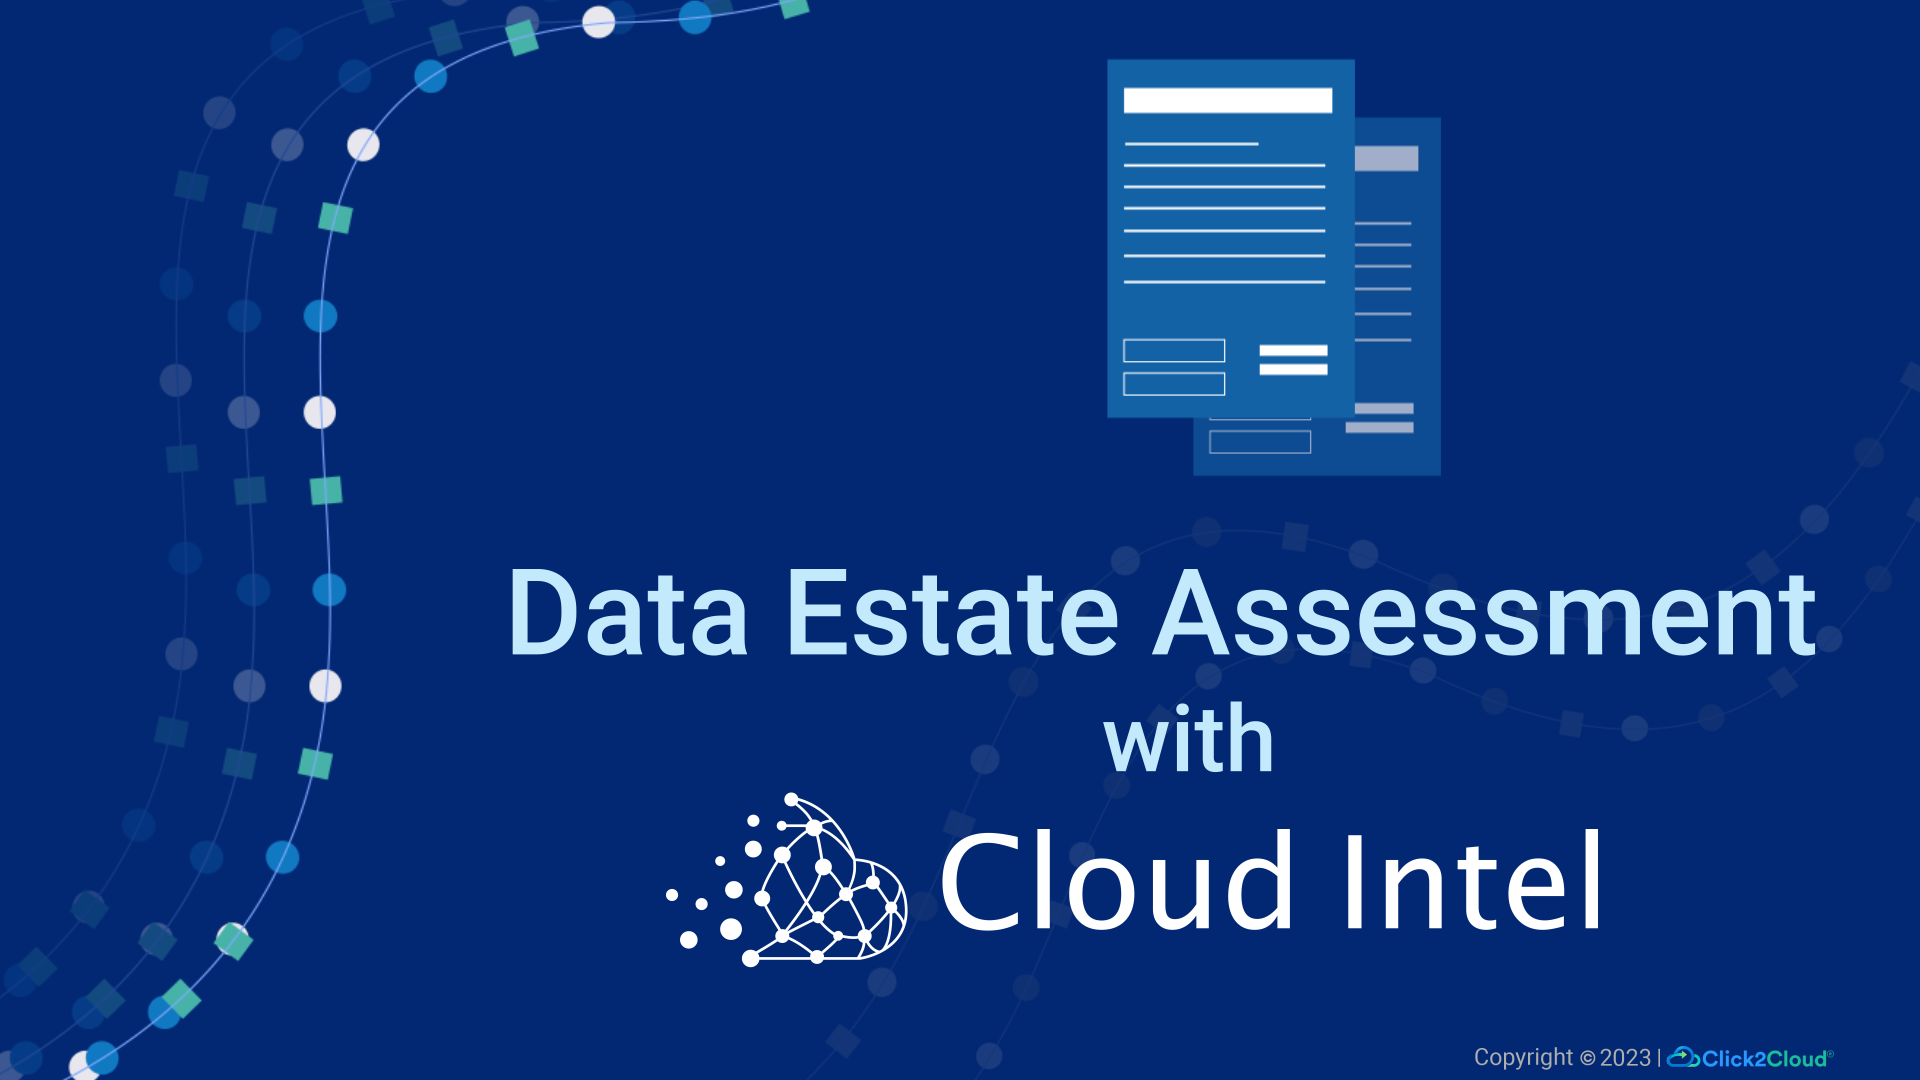 Drive Data-Driven Business with Cloud Intel's Data Estate Assessment-Click2Cloud